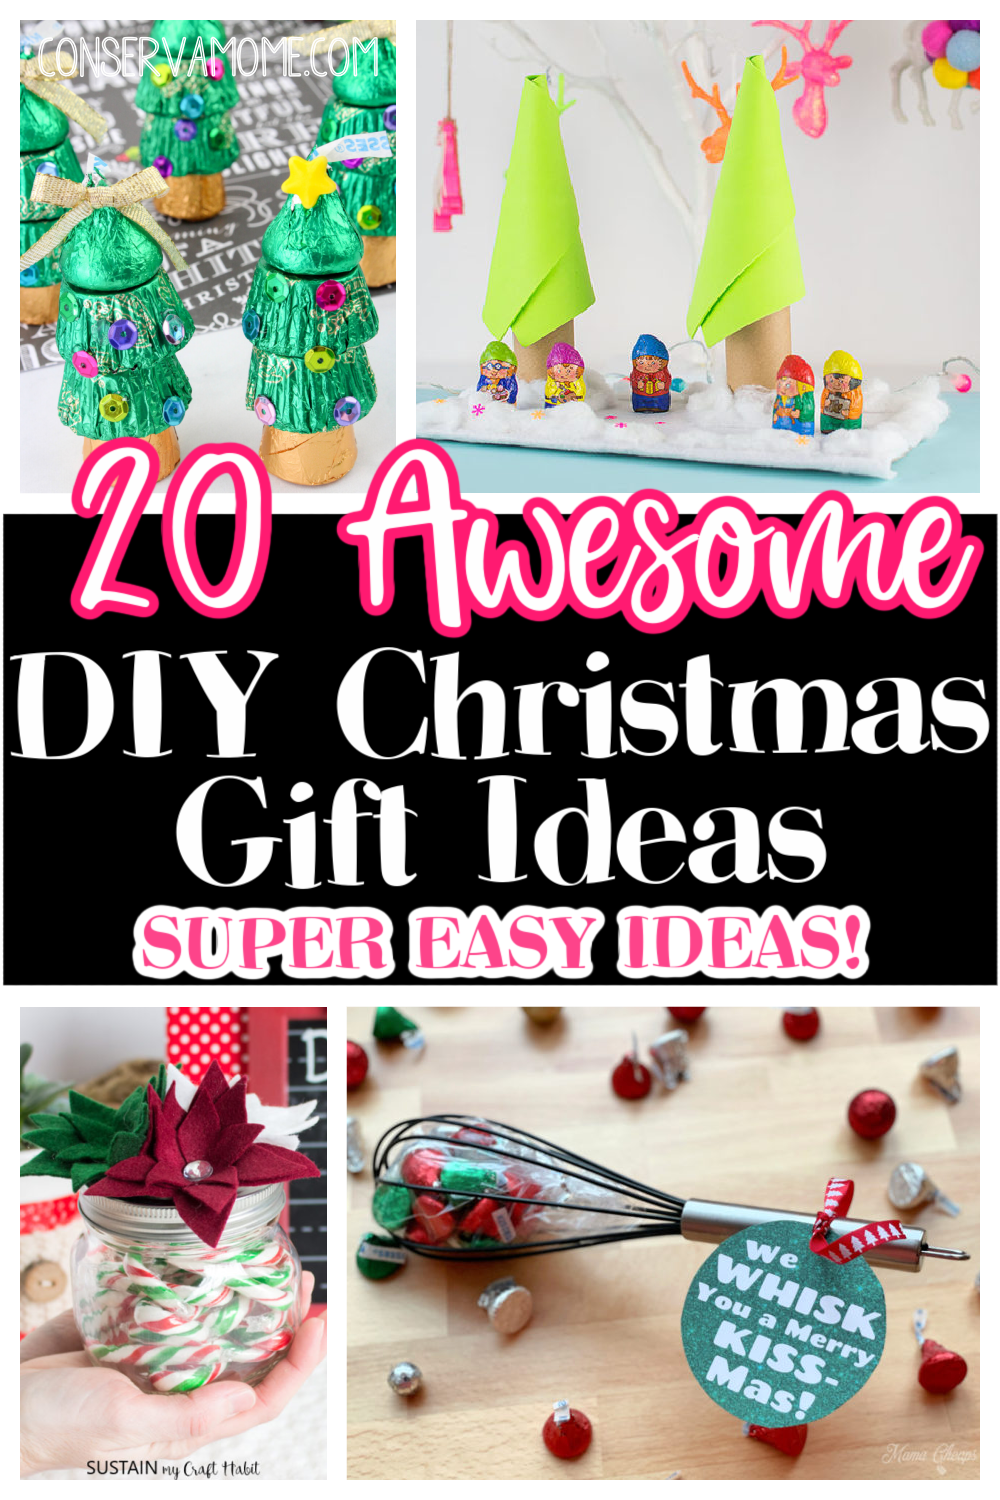 20 Awesome diy Christmas gift ideas